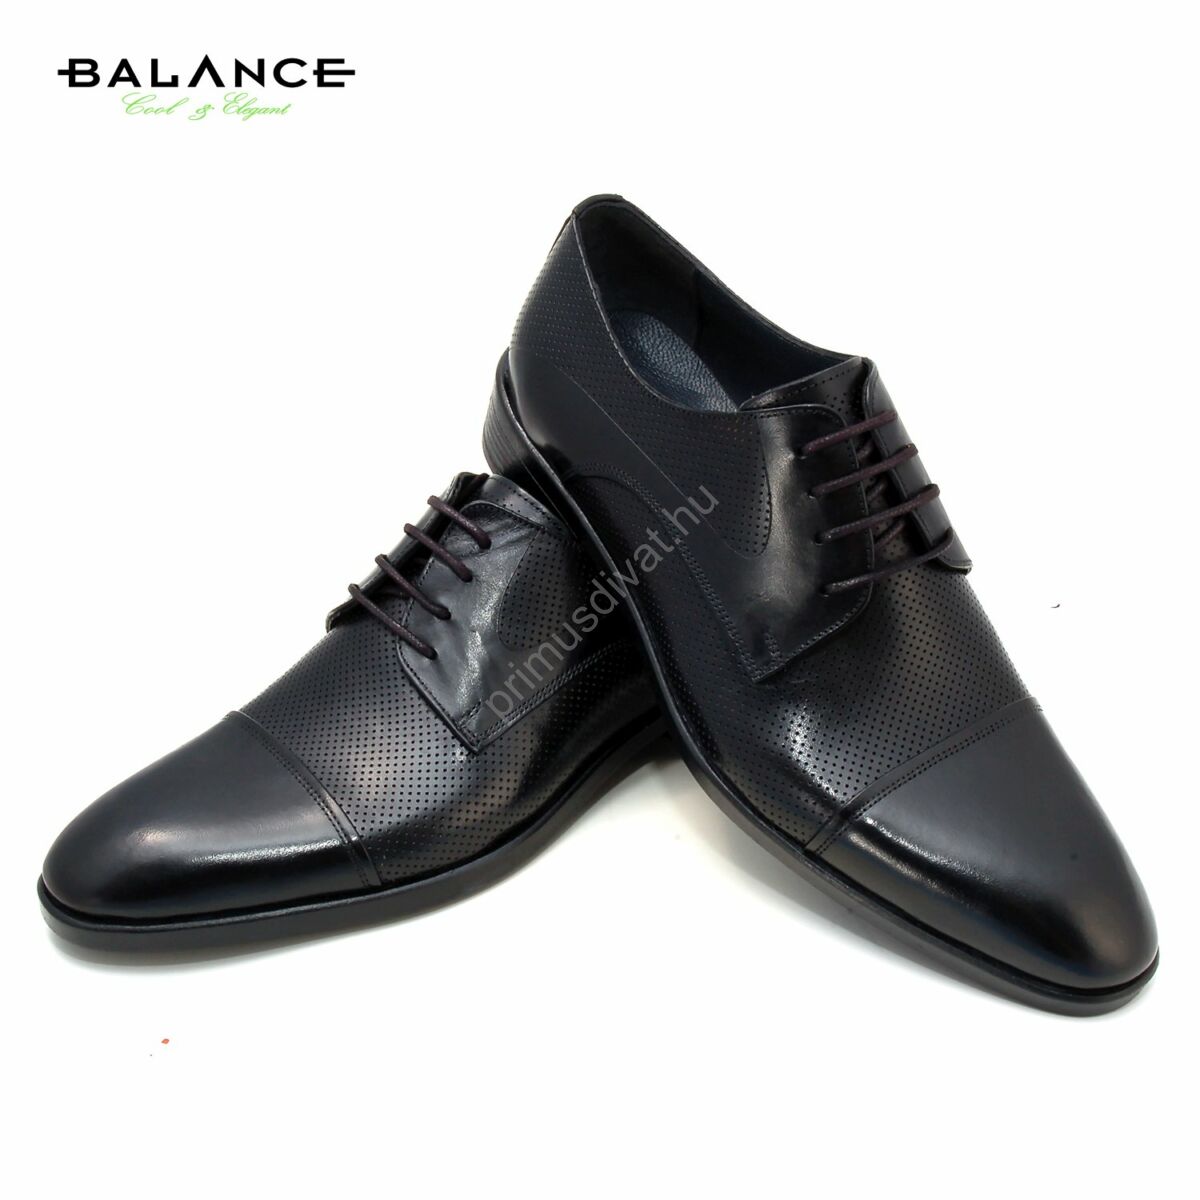 Balance fűzős bőr alkalmi férfi cipő, fekete